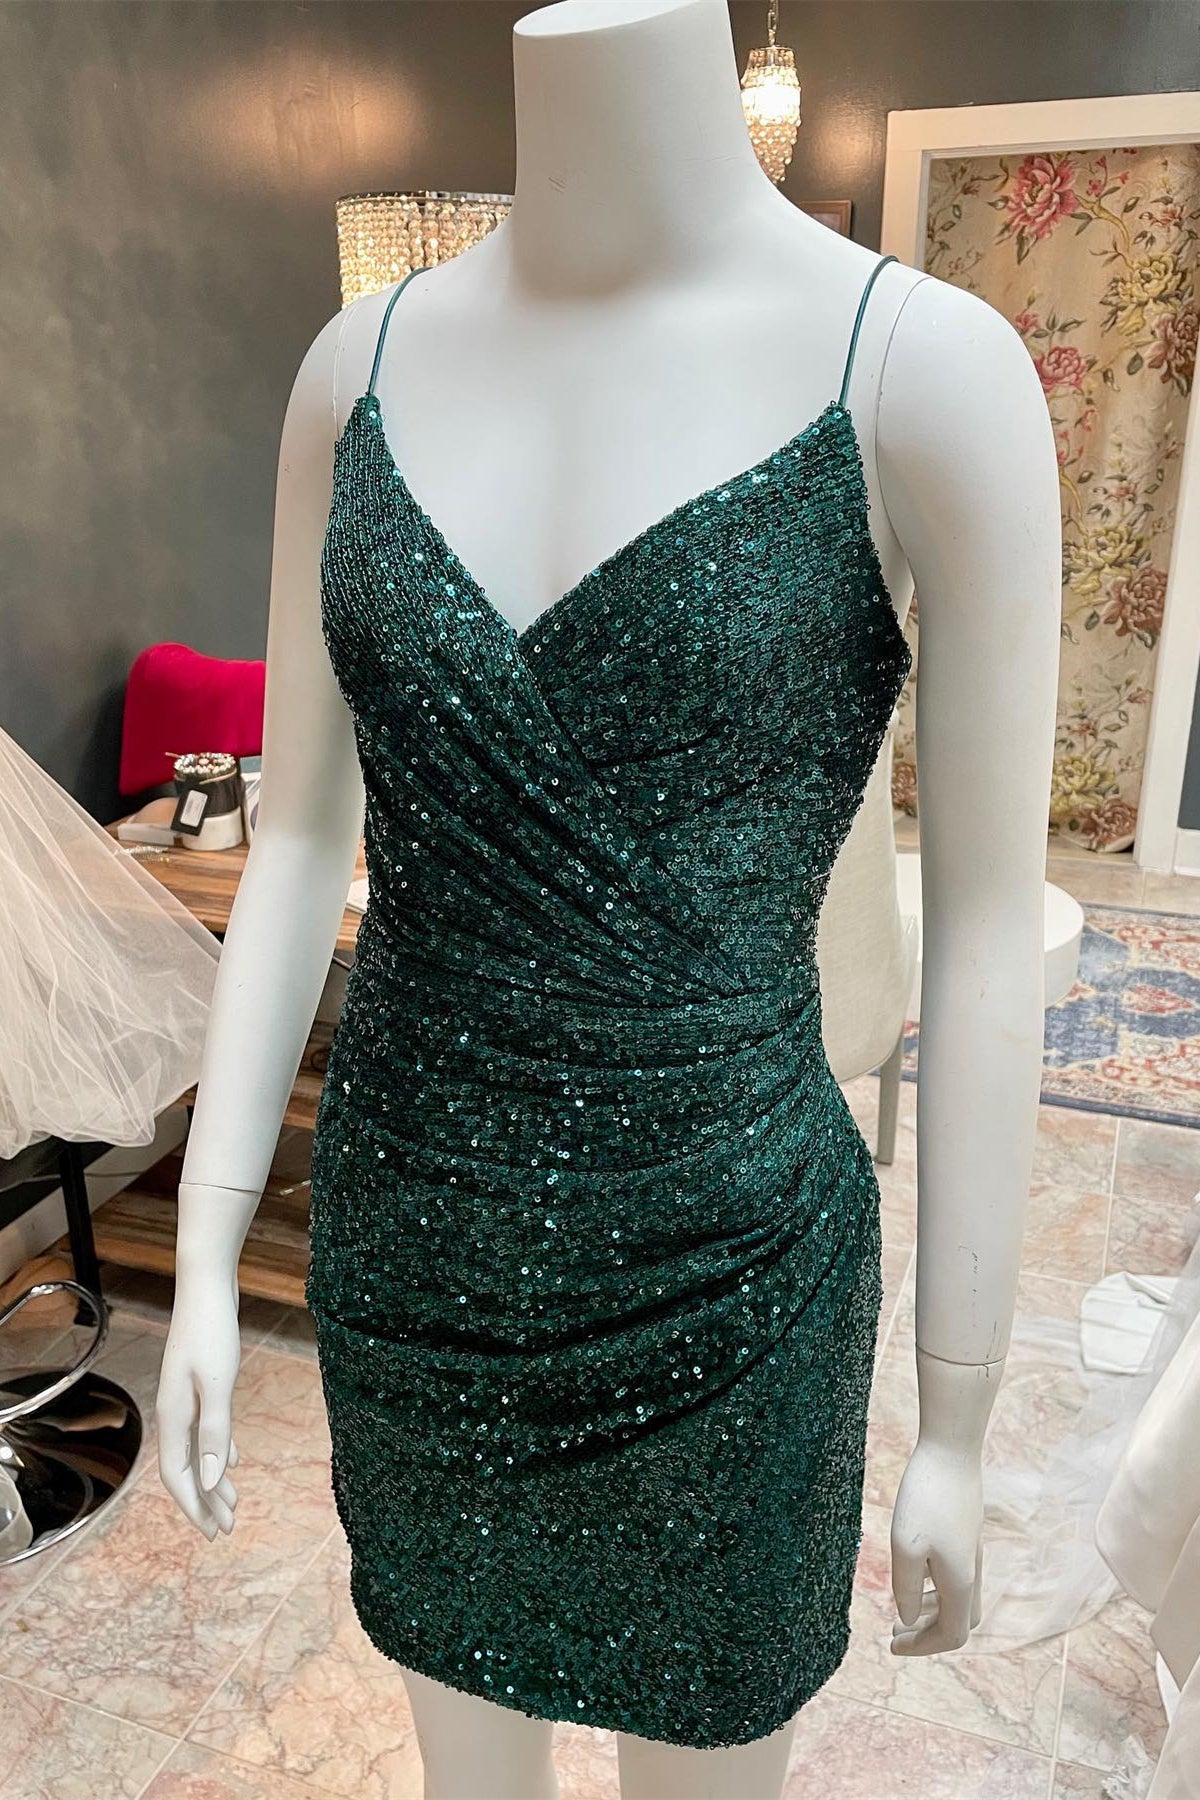 Glitters Royal Blue Sequin Tight Mini Party Dress